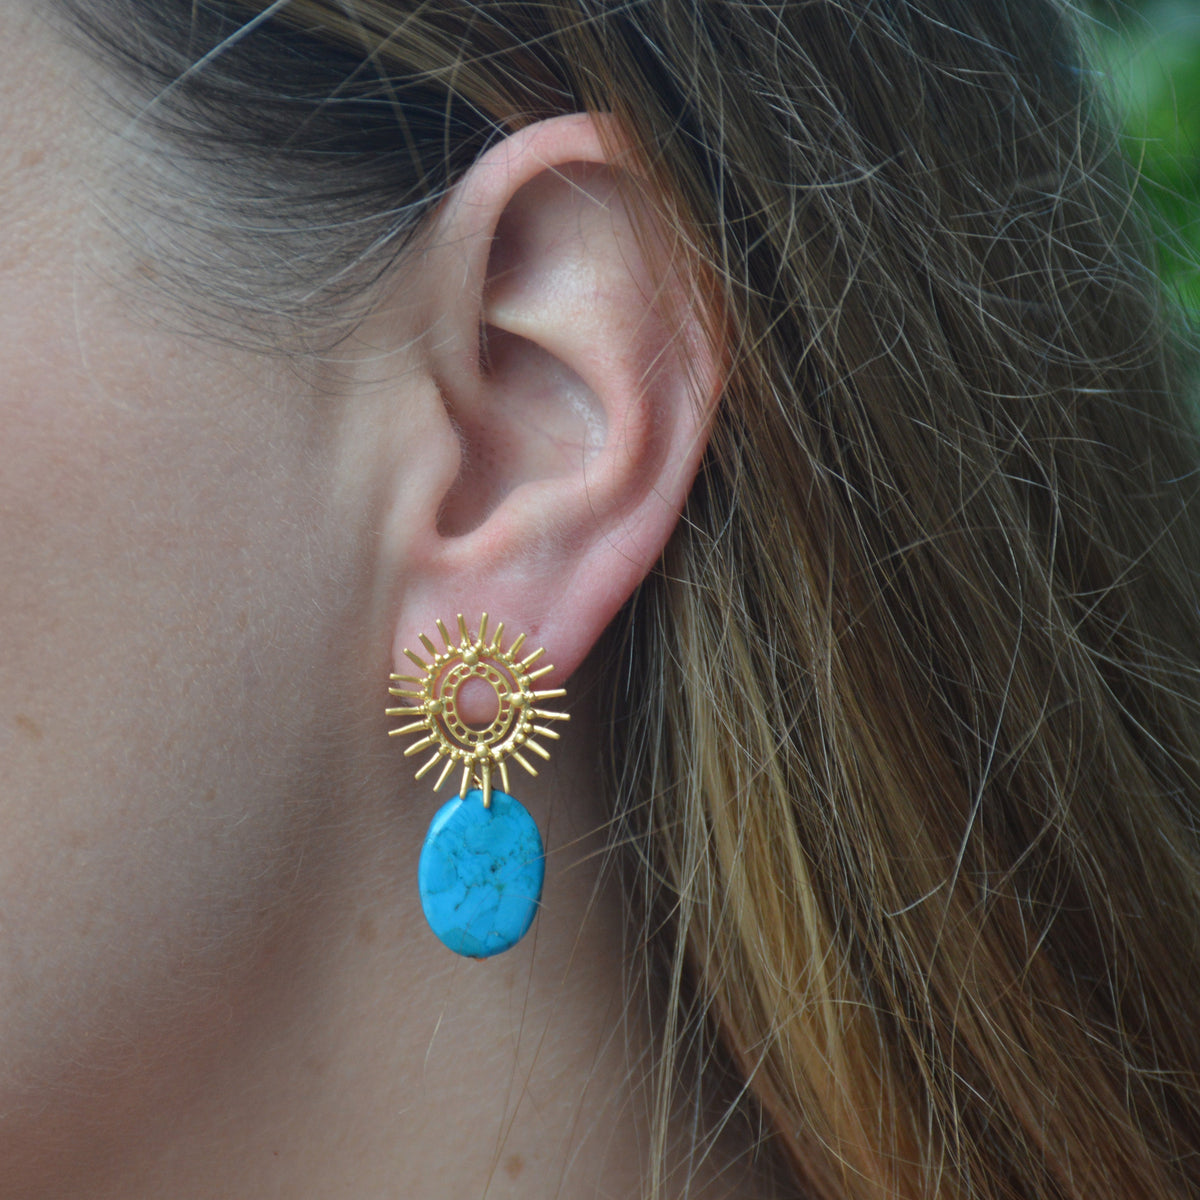 Alegra Arizonia Blue Turquoise Earring Gold or Silver